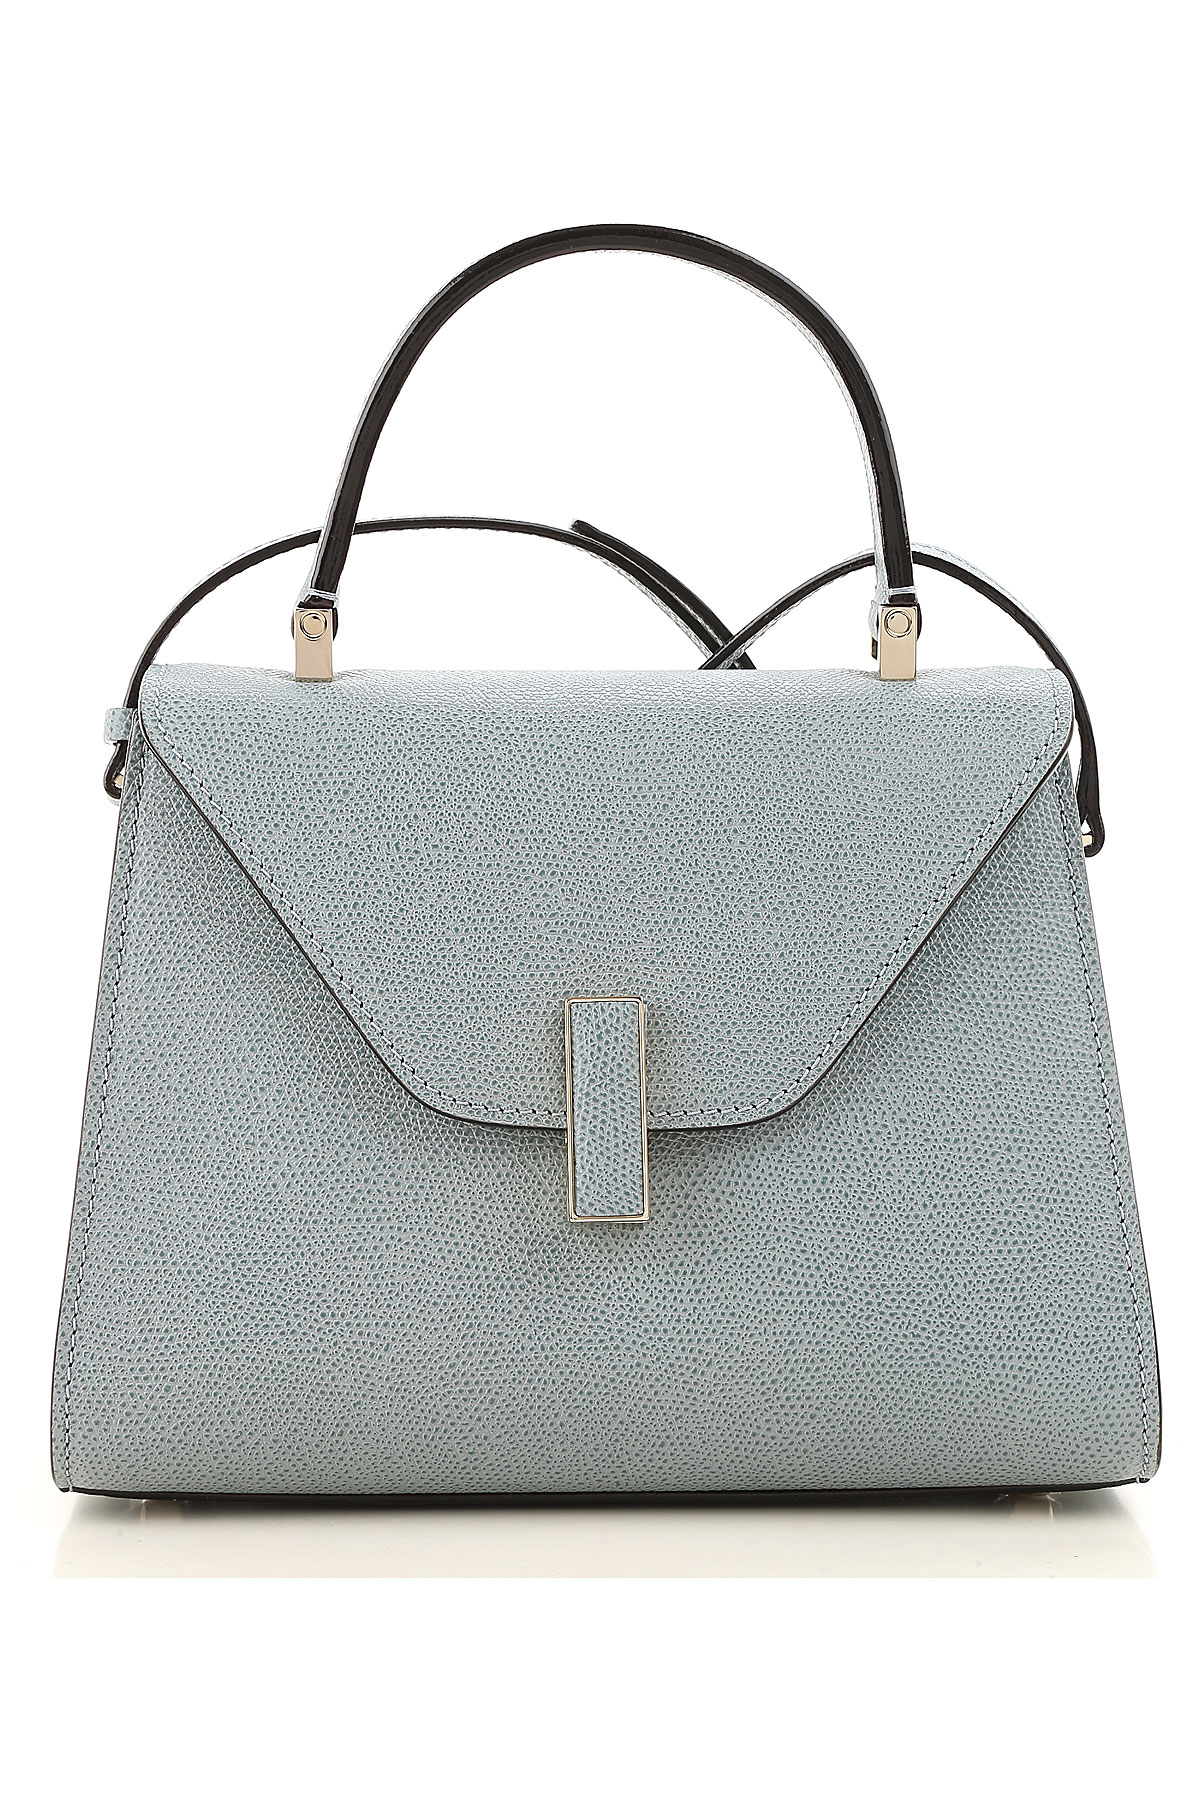 Handbags Valextra, Style code: v5e36-02800p0-0c